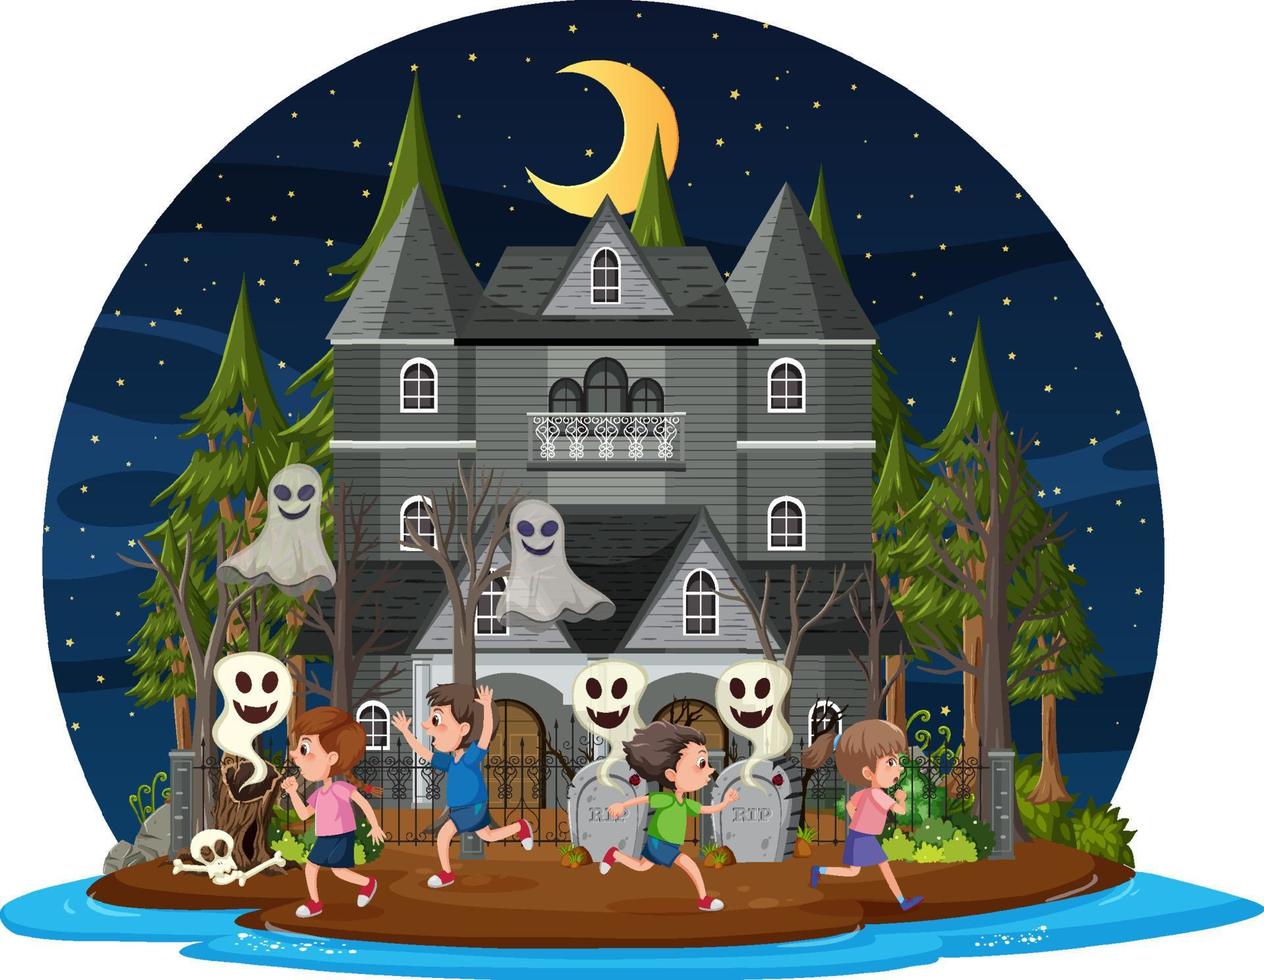 Haunted house at night scene vector